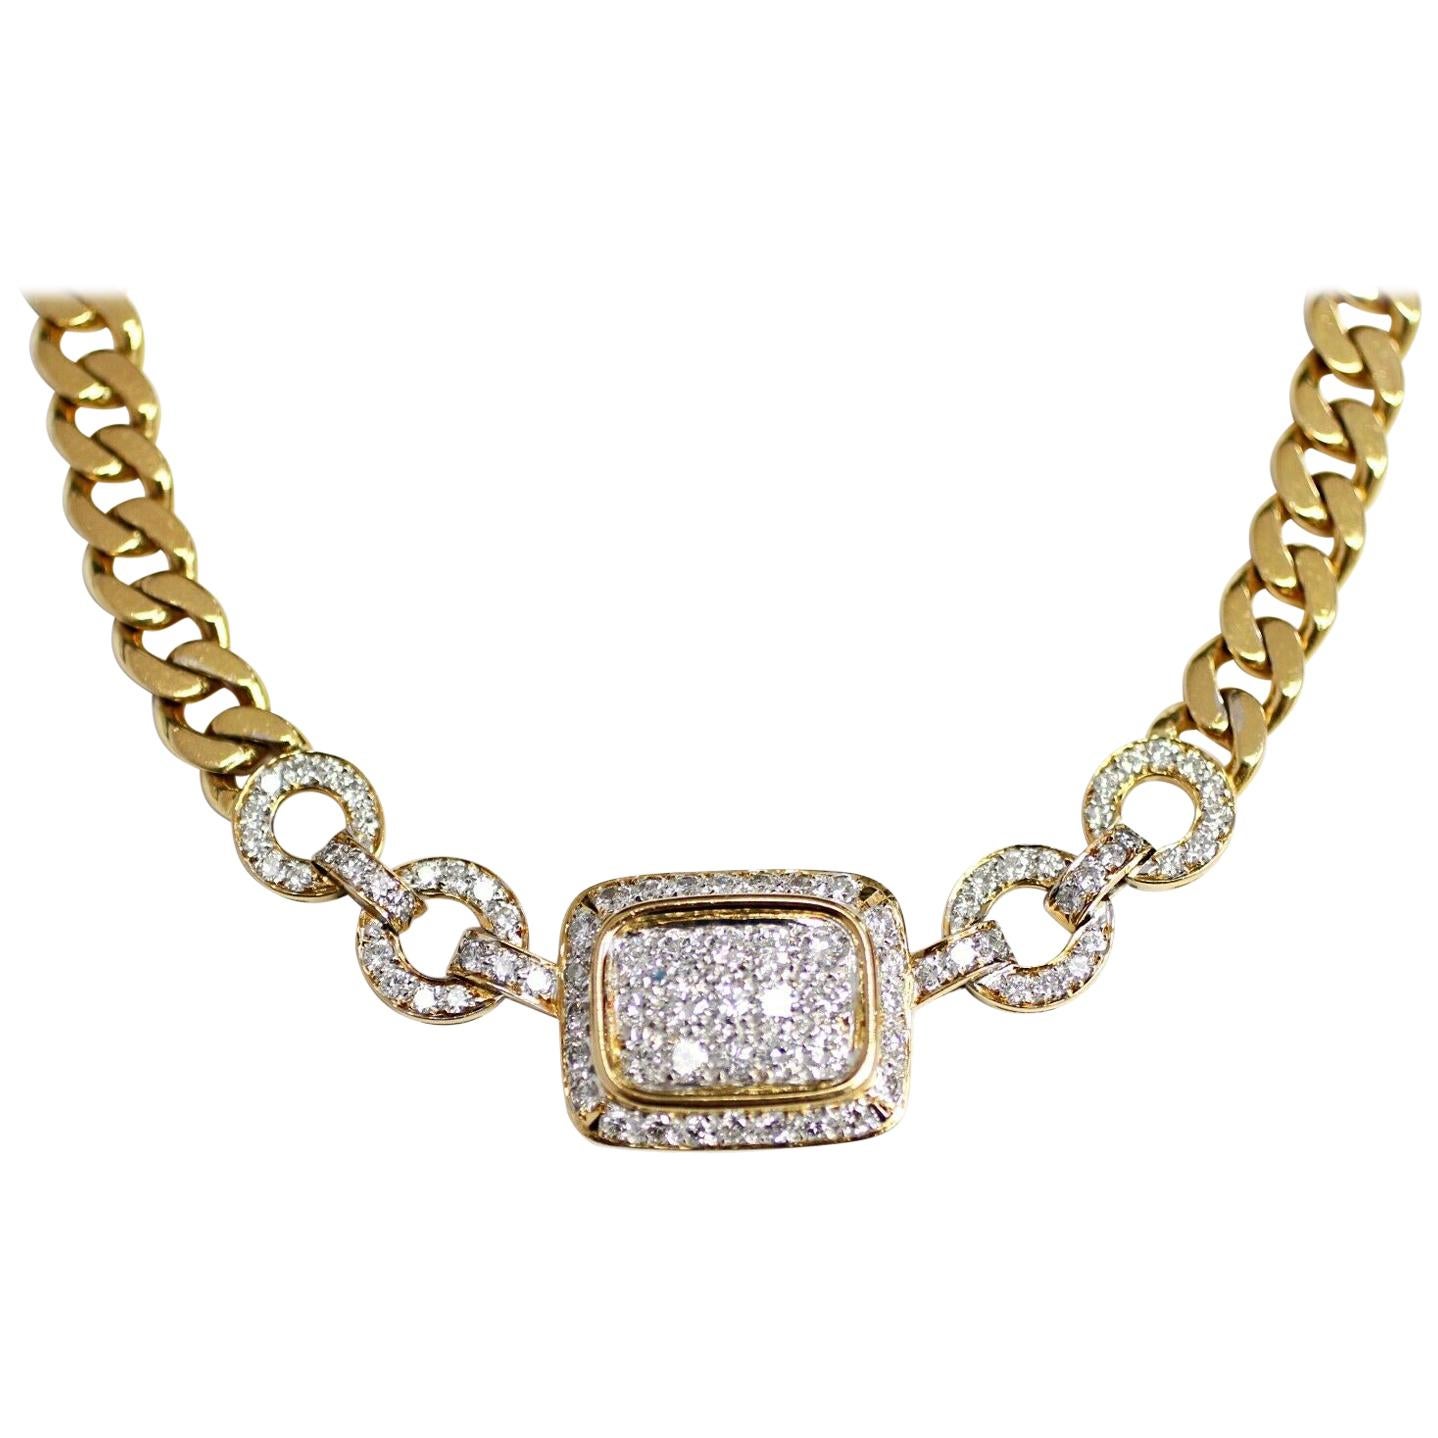 18 Karat Yellow Gold Diamond Link Necklace with 3.50 Carat in Diamonds